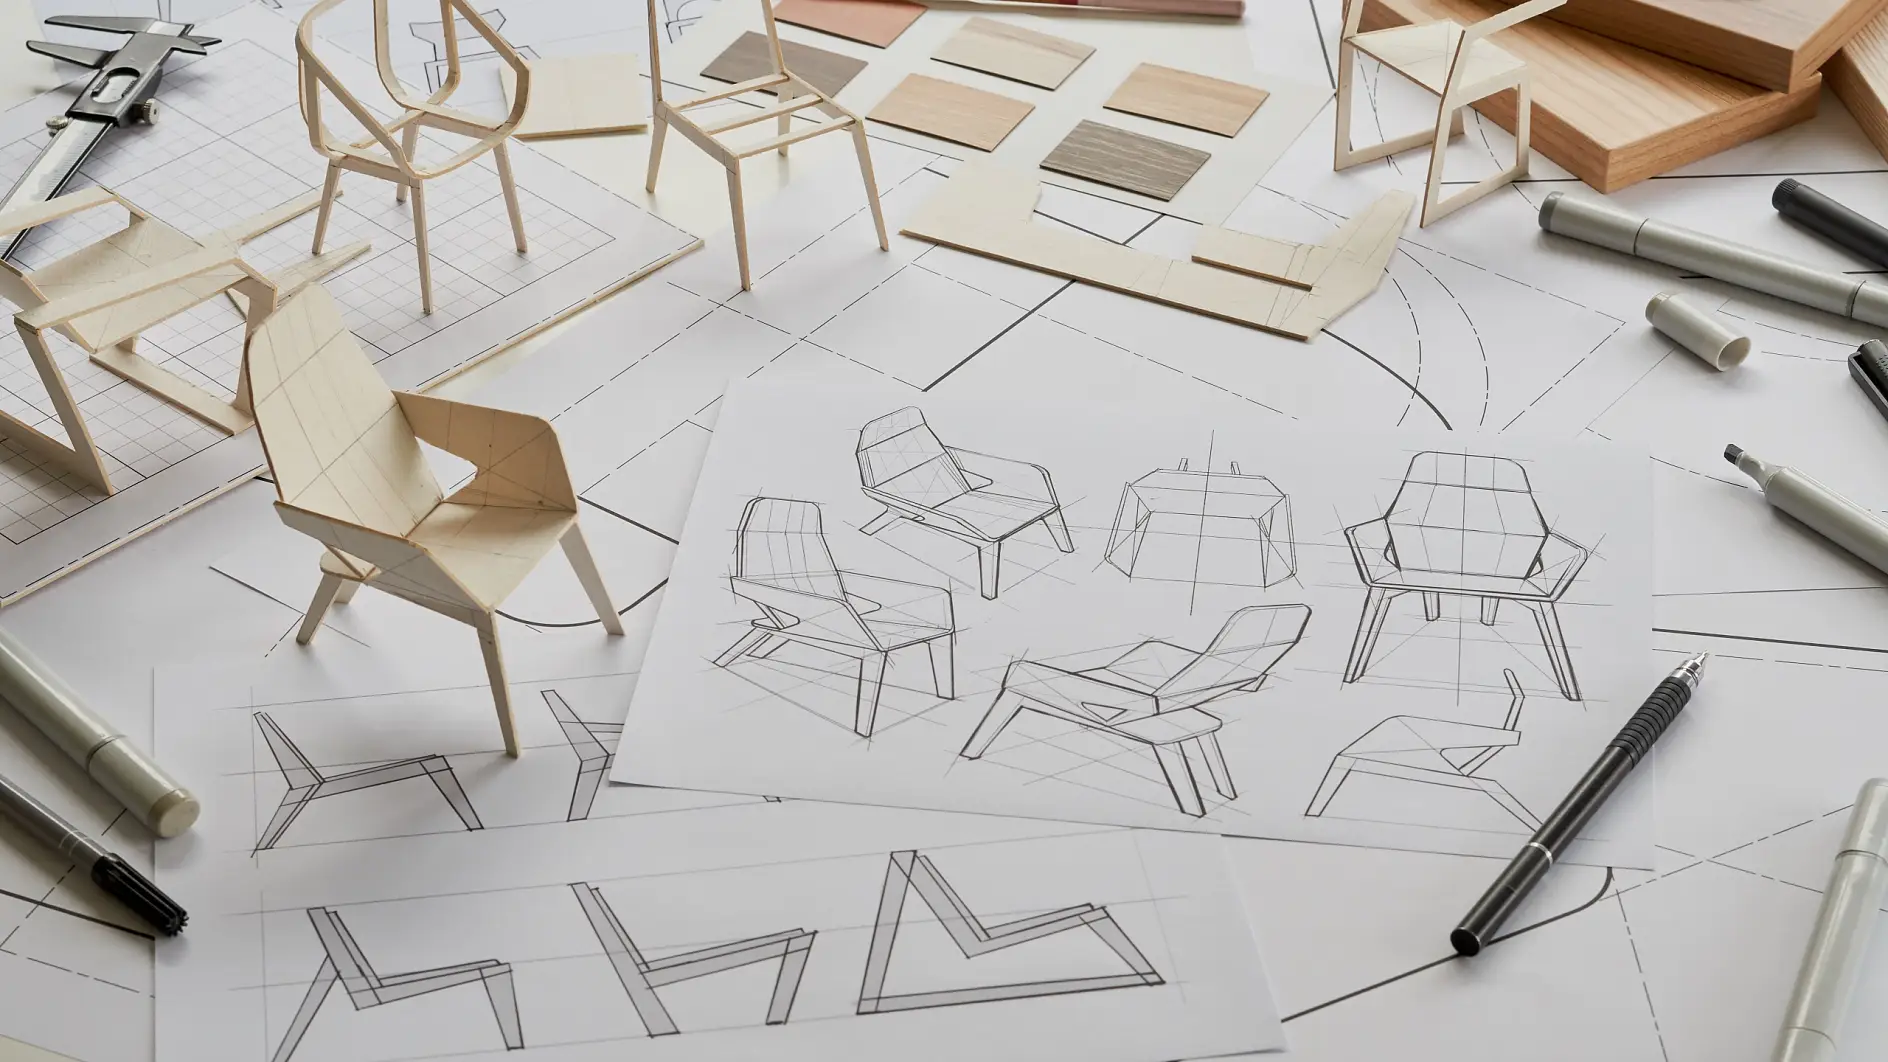 Designer sketching drawing design development product plan draft chair armchair Wingback Interior furniture prototype manufacturing production. designer studio concept . 